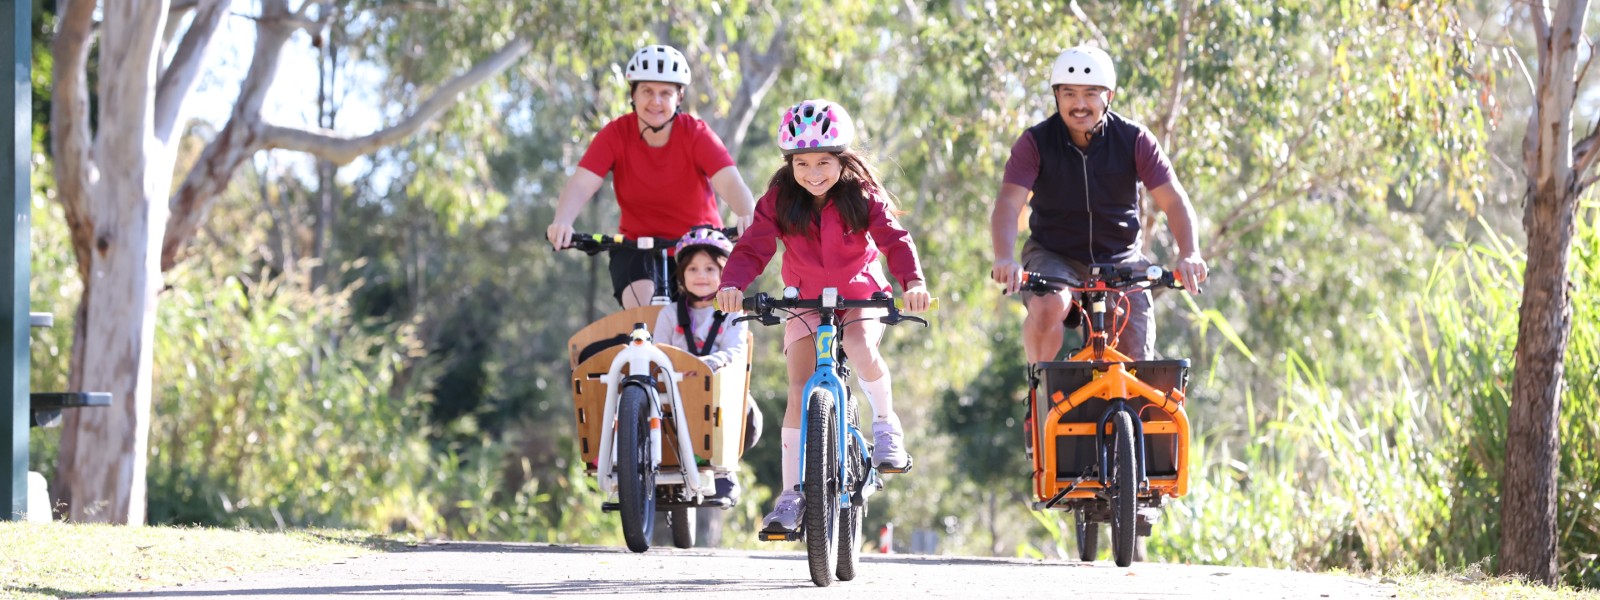 A family cycling through a park